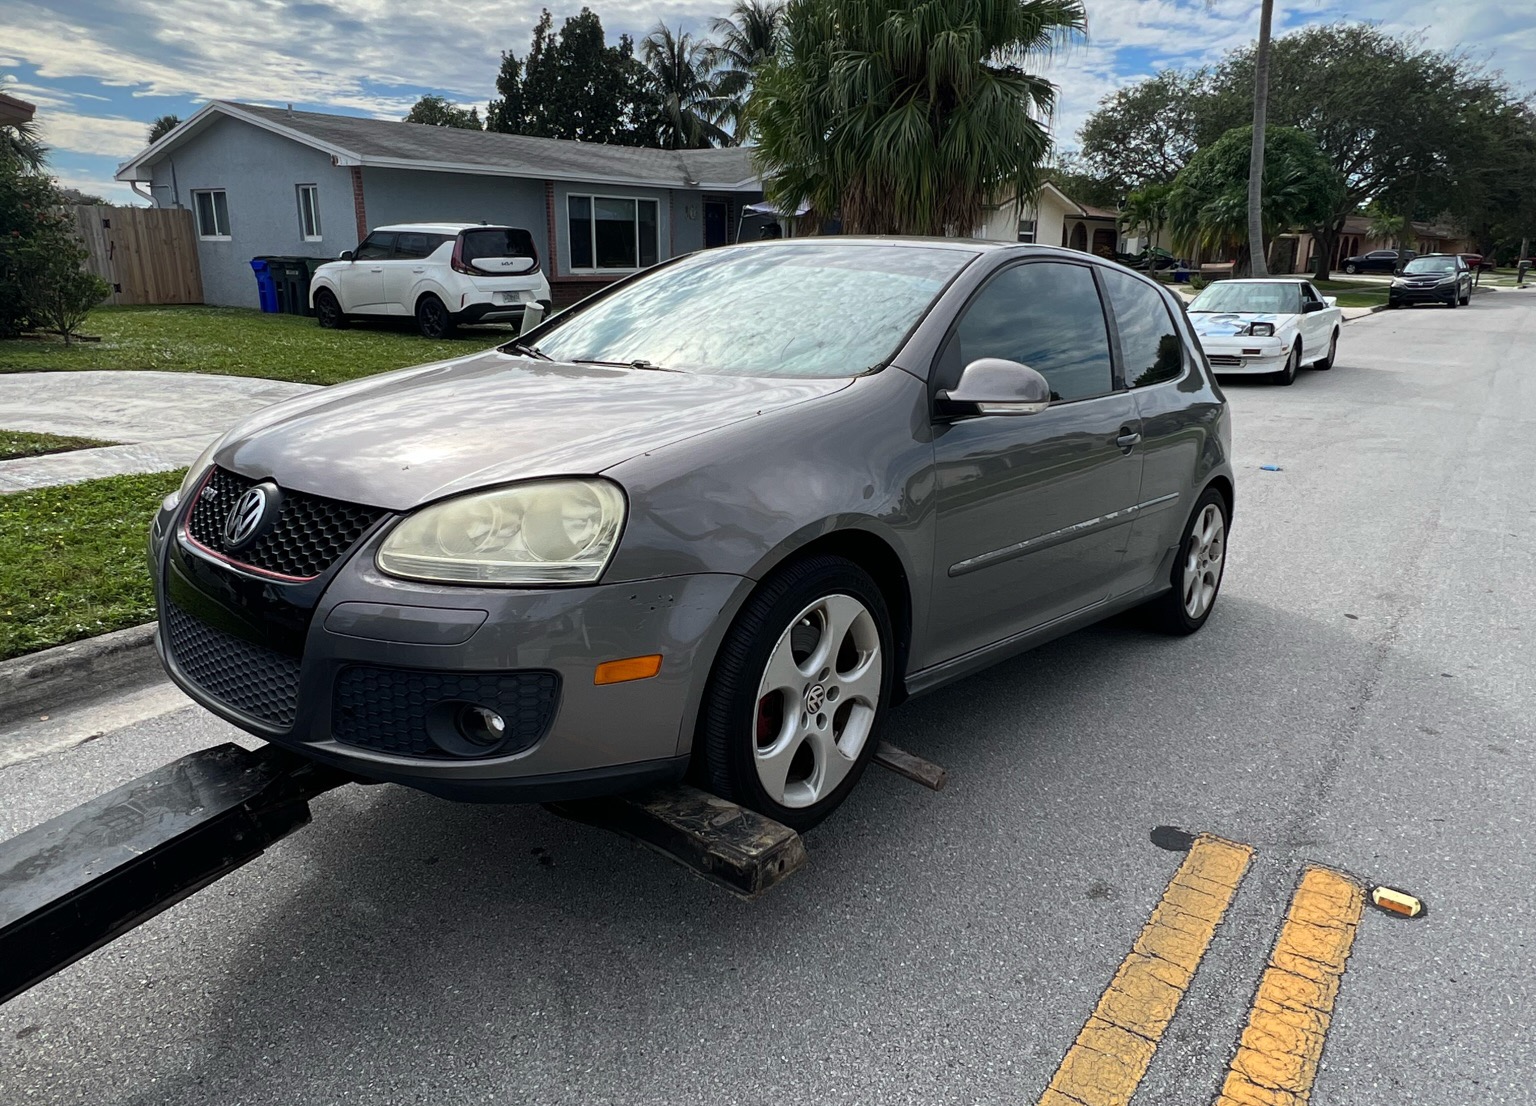 Cash for junk cars service in Fort Lauderdale, FL